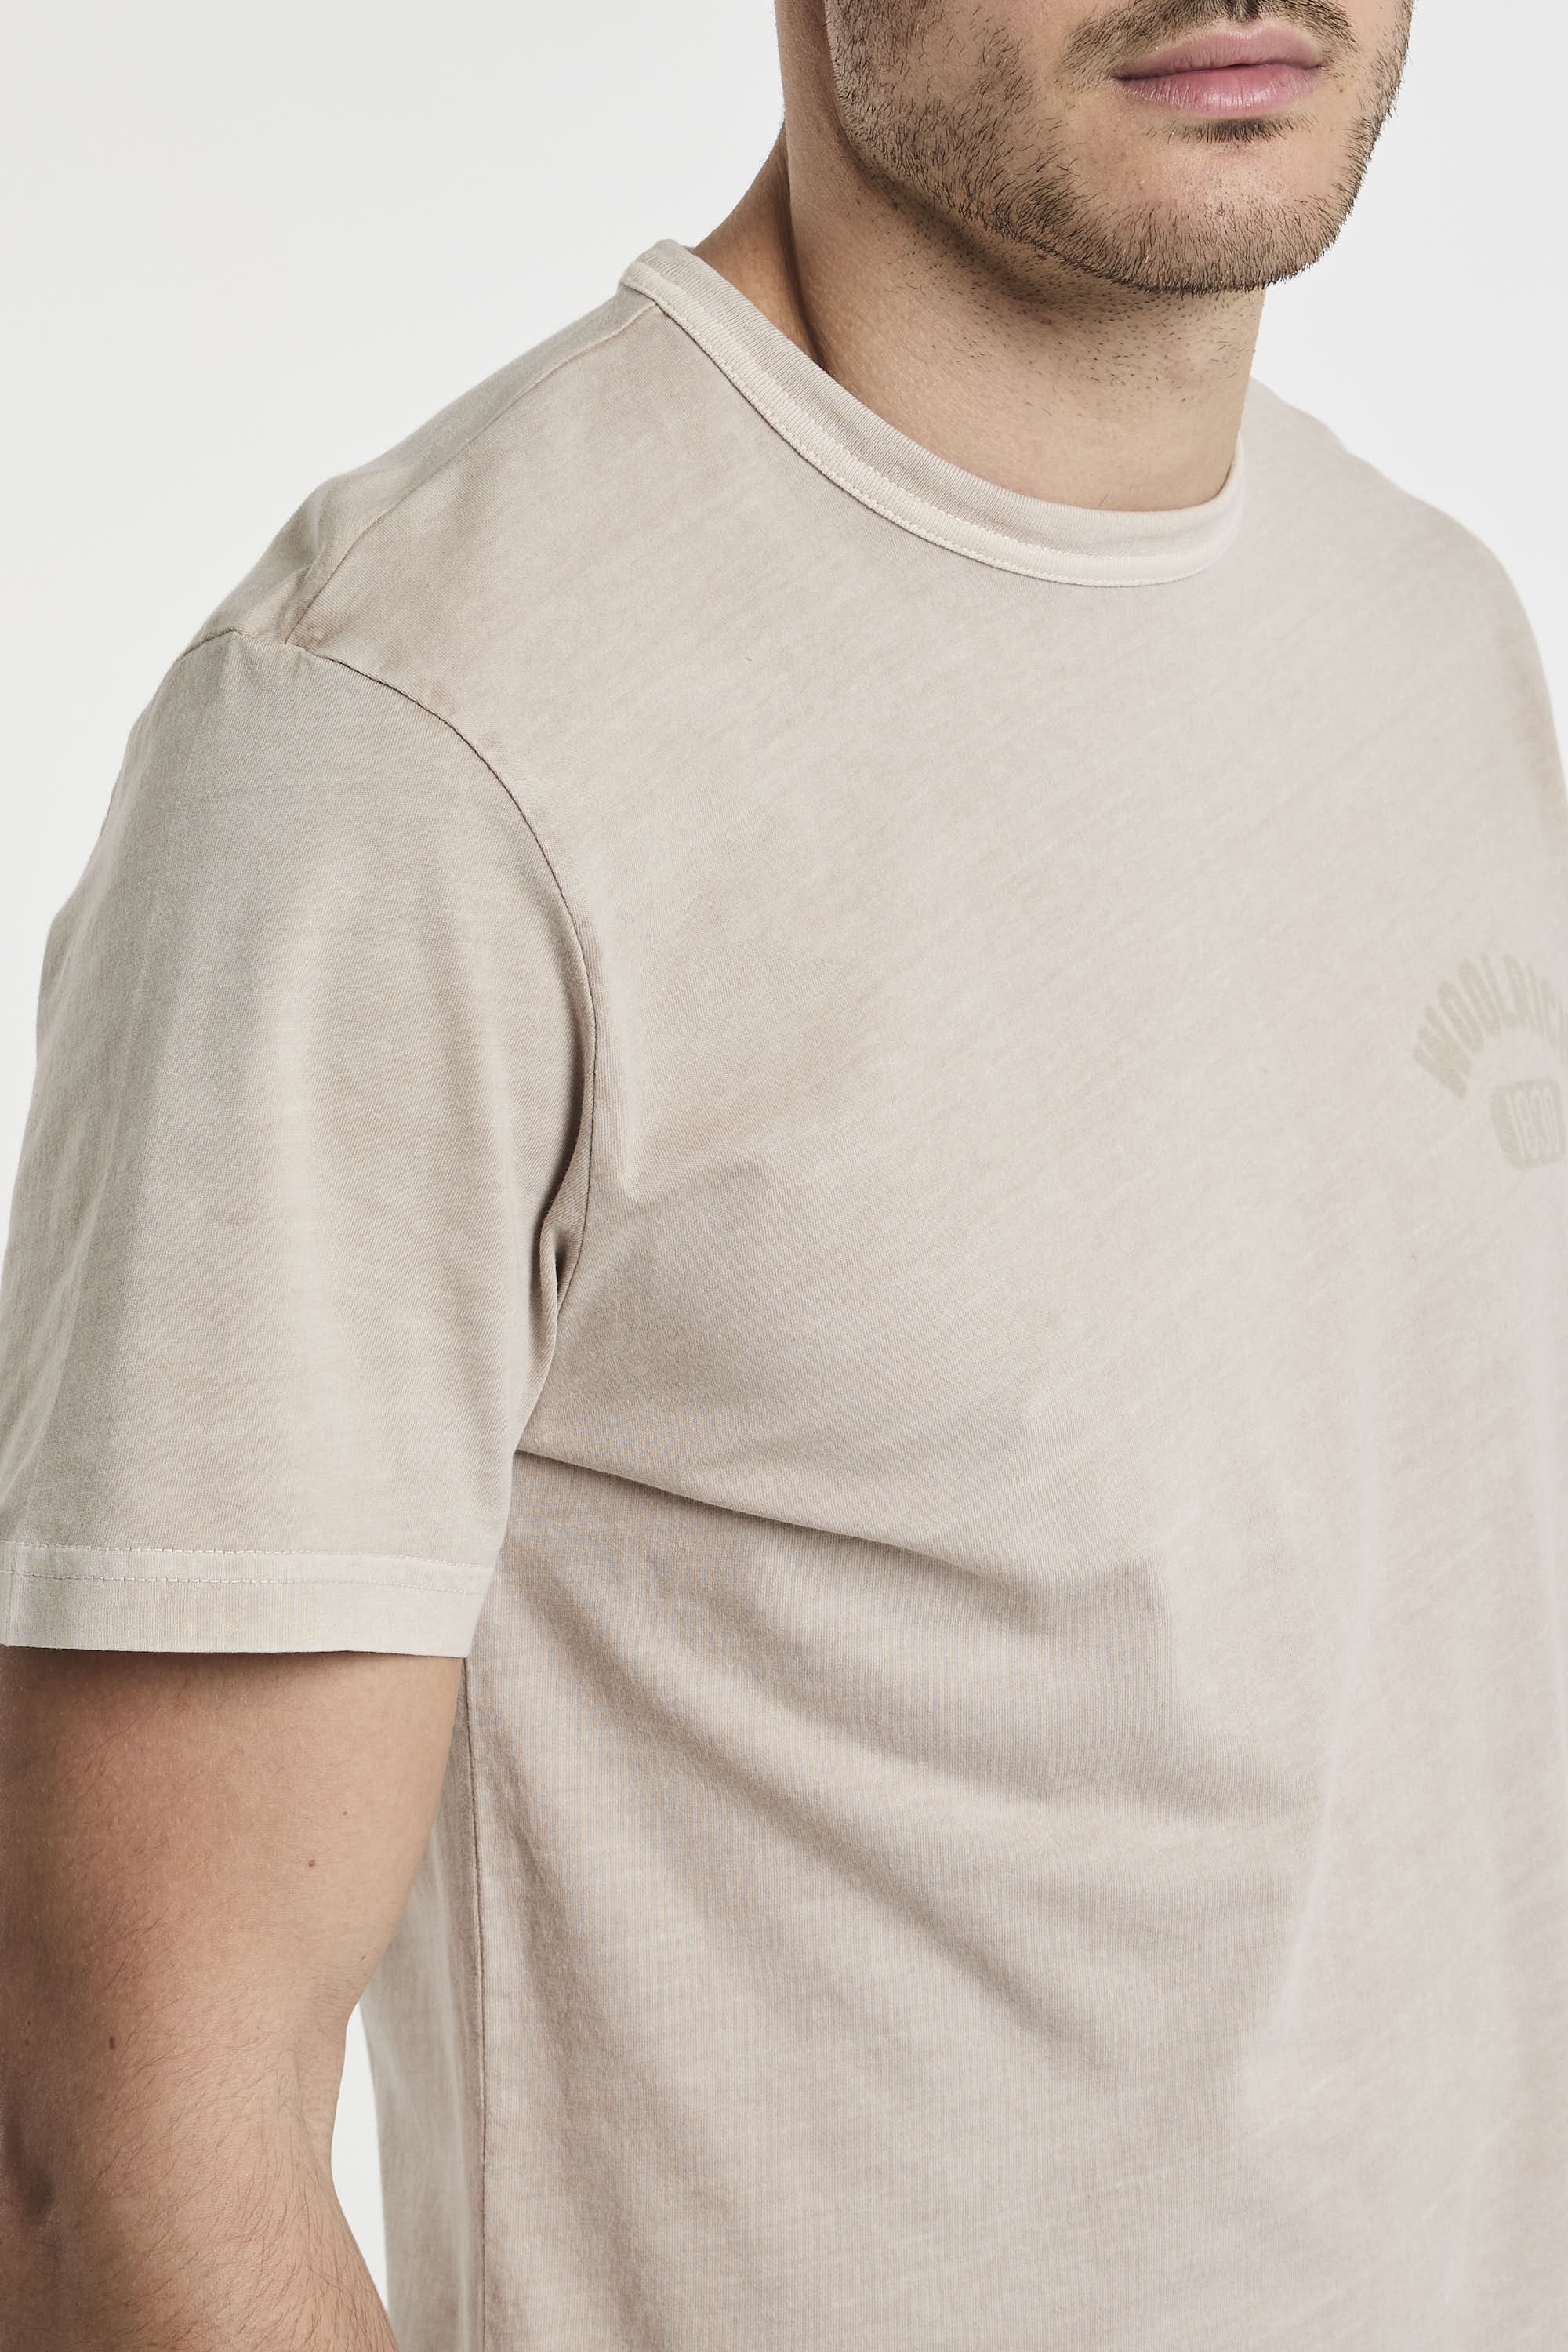 Woolrich Garment-Dyed Pure Cotton Beige T-Shirt-6